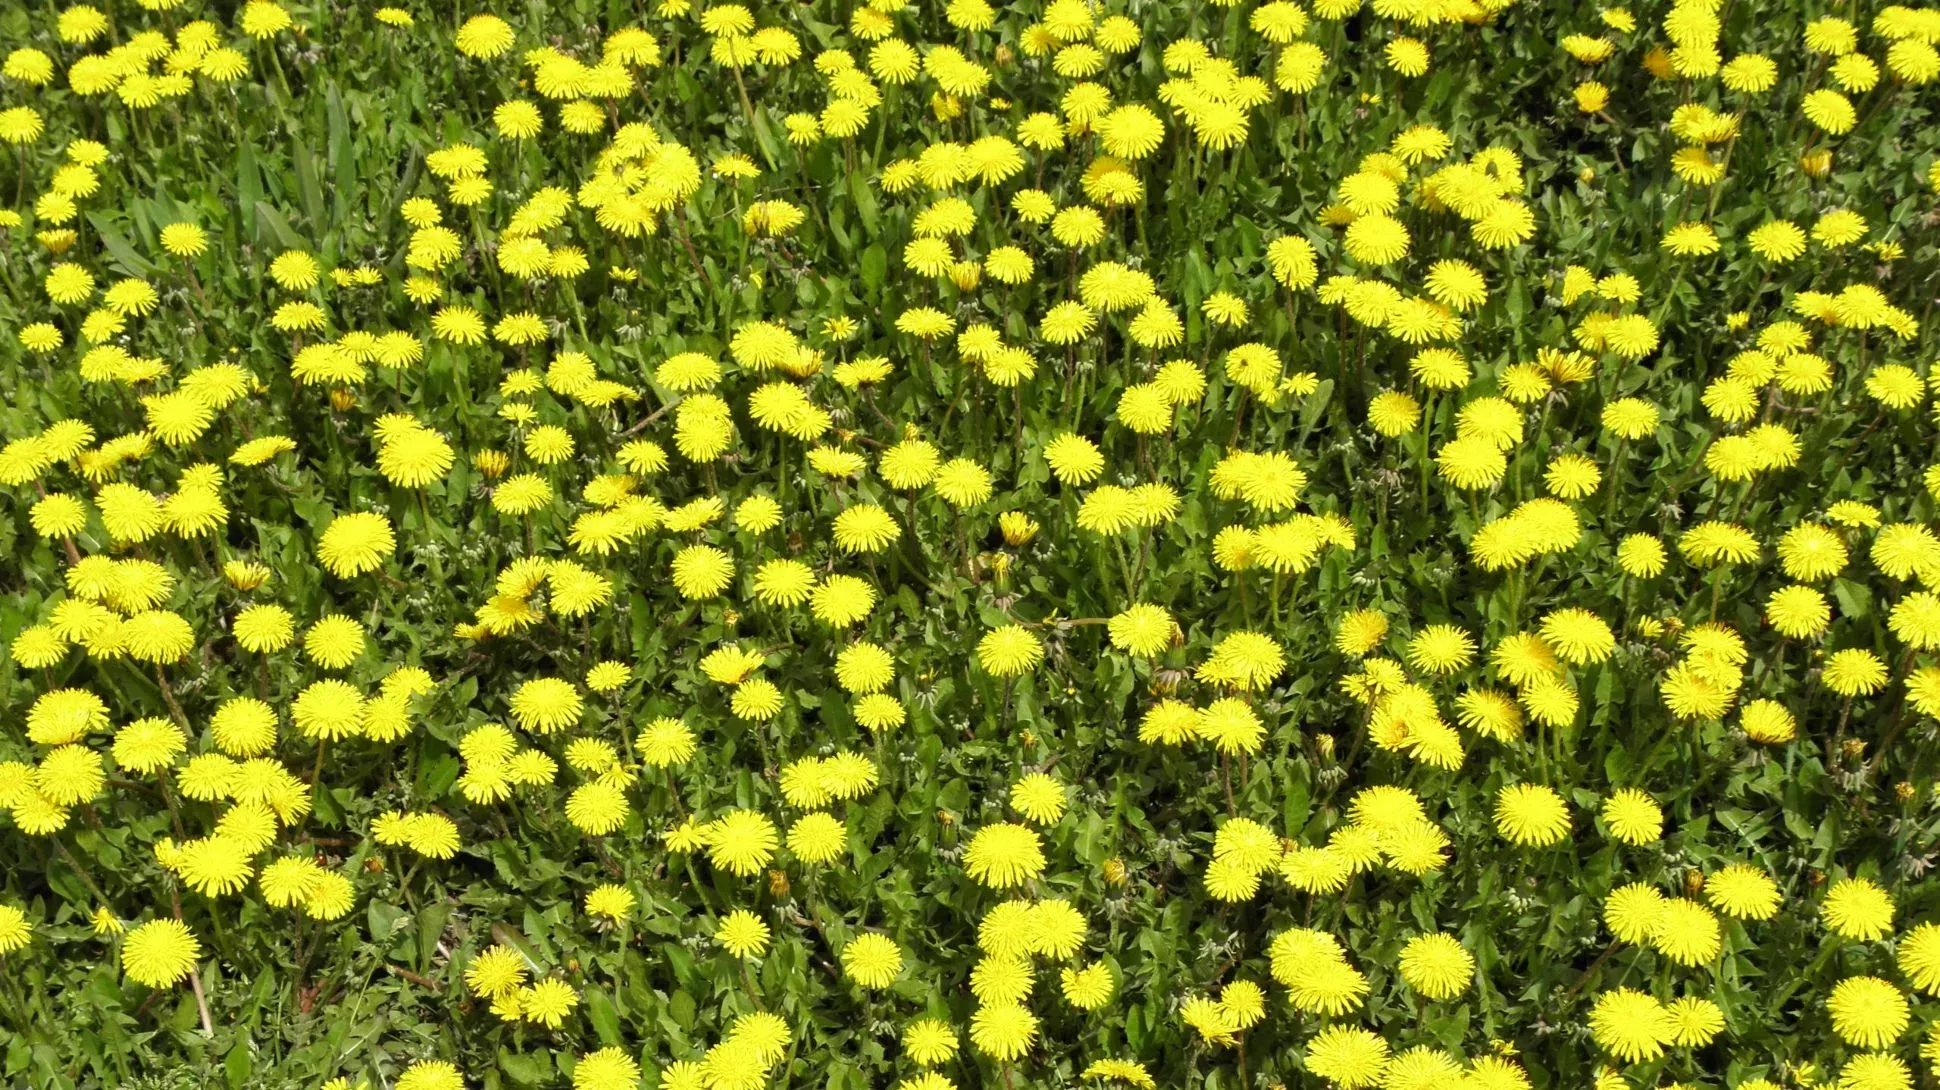 A field full of yellow dandelion flowers on green grass